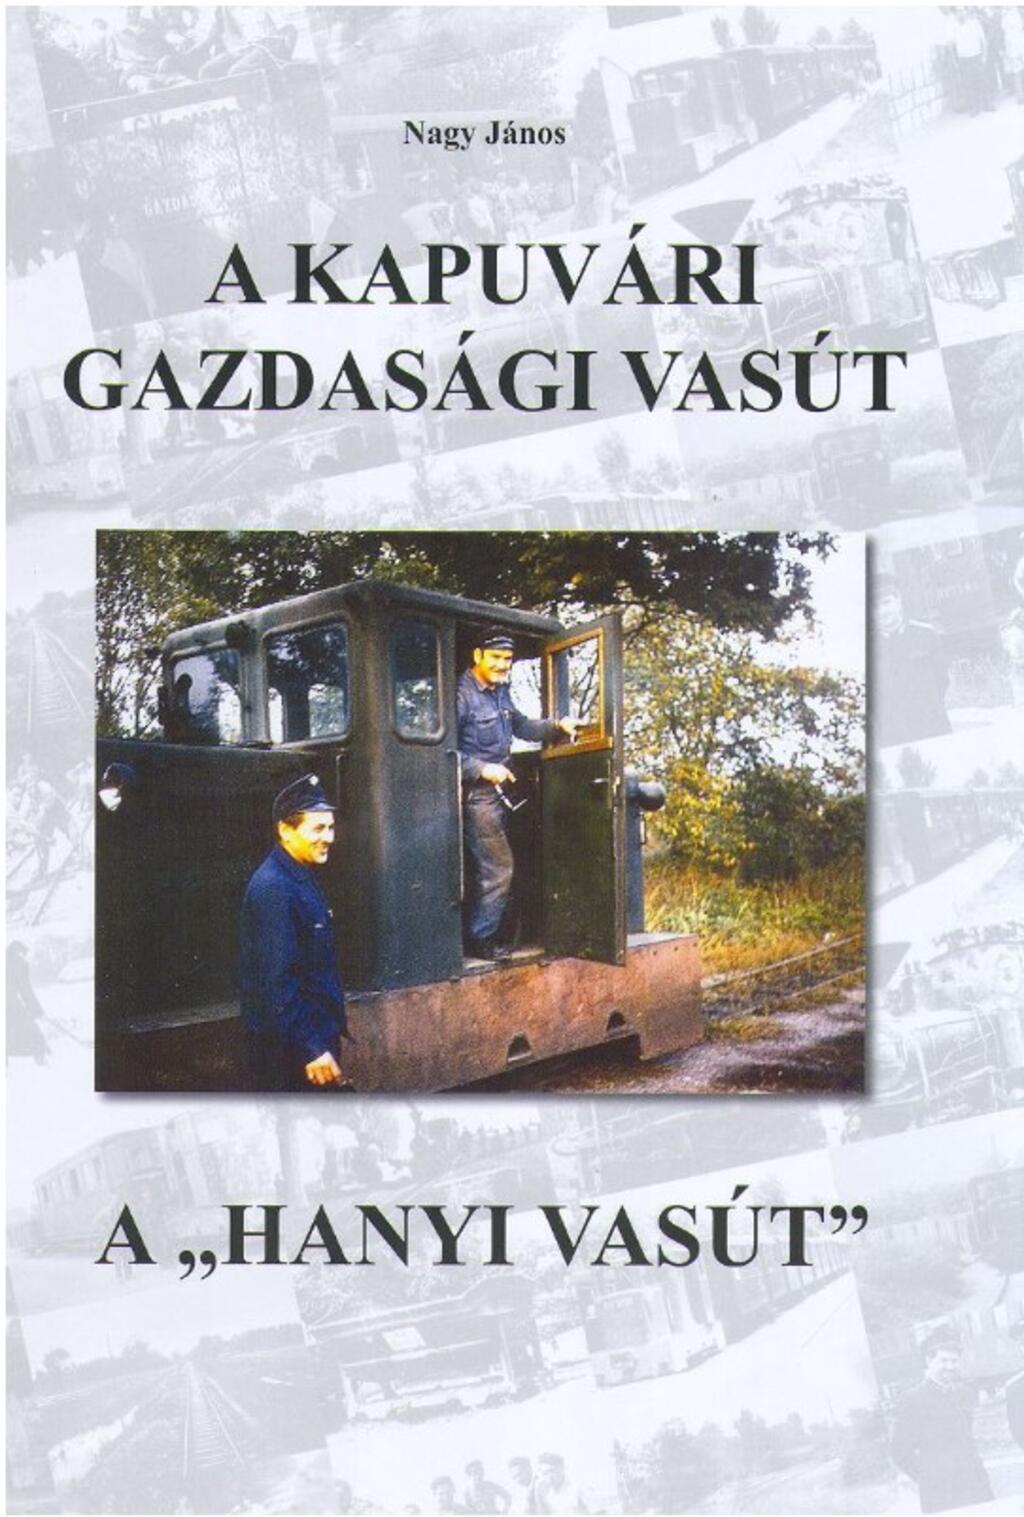 A kapuvri gazdasgi vast - A hanyi vast (2010.)